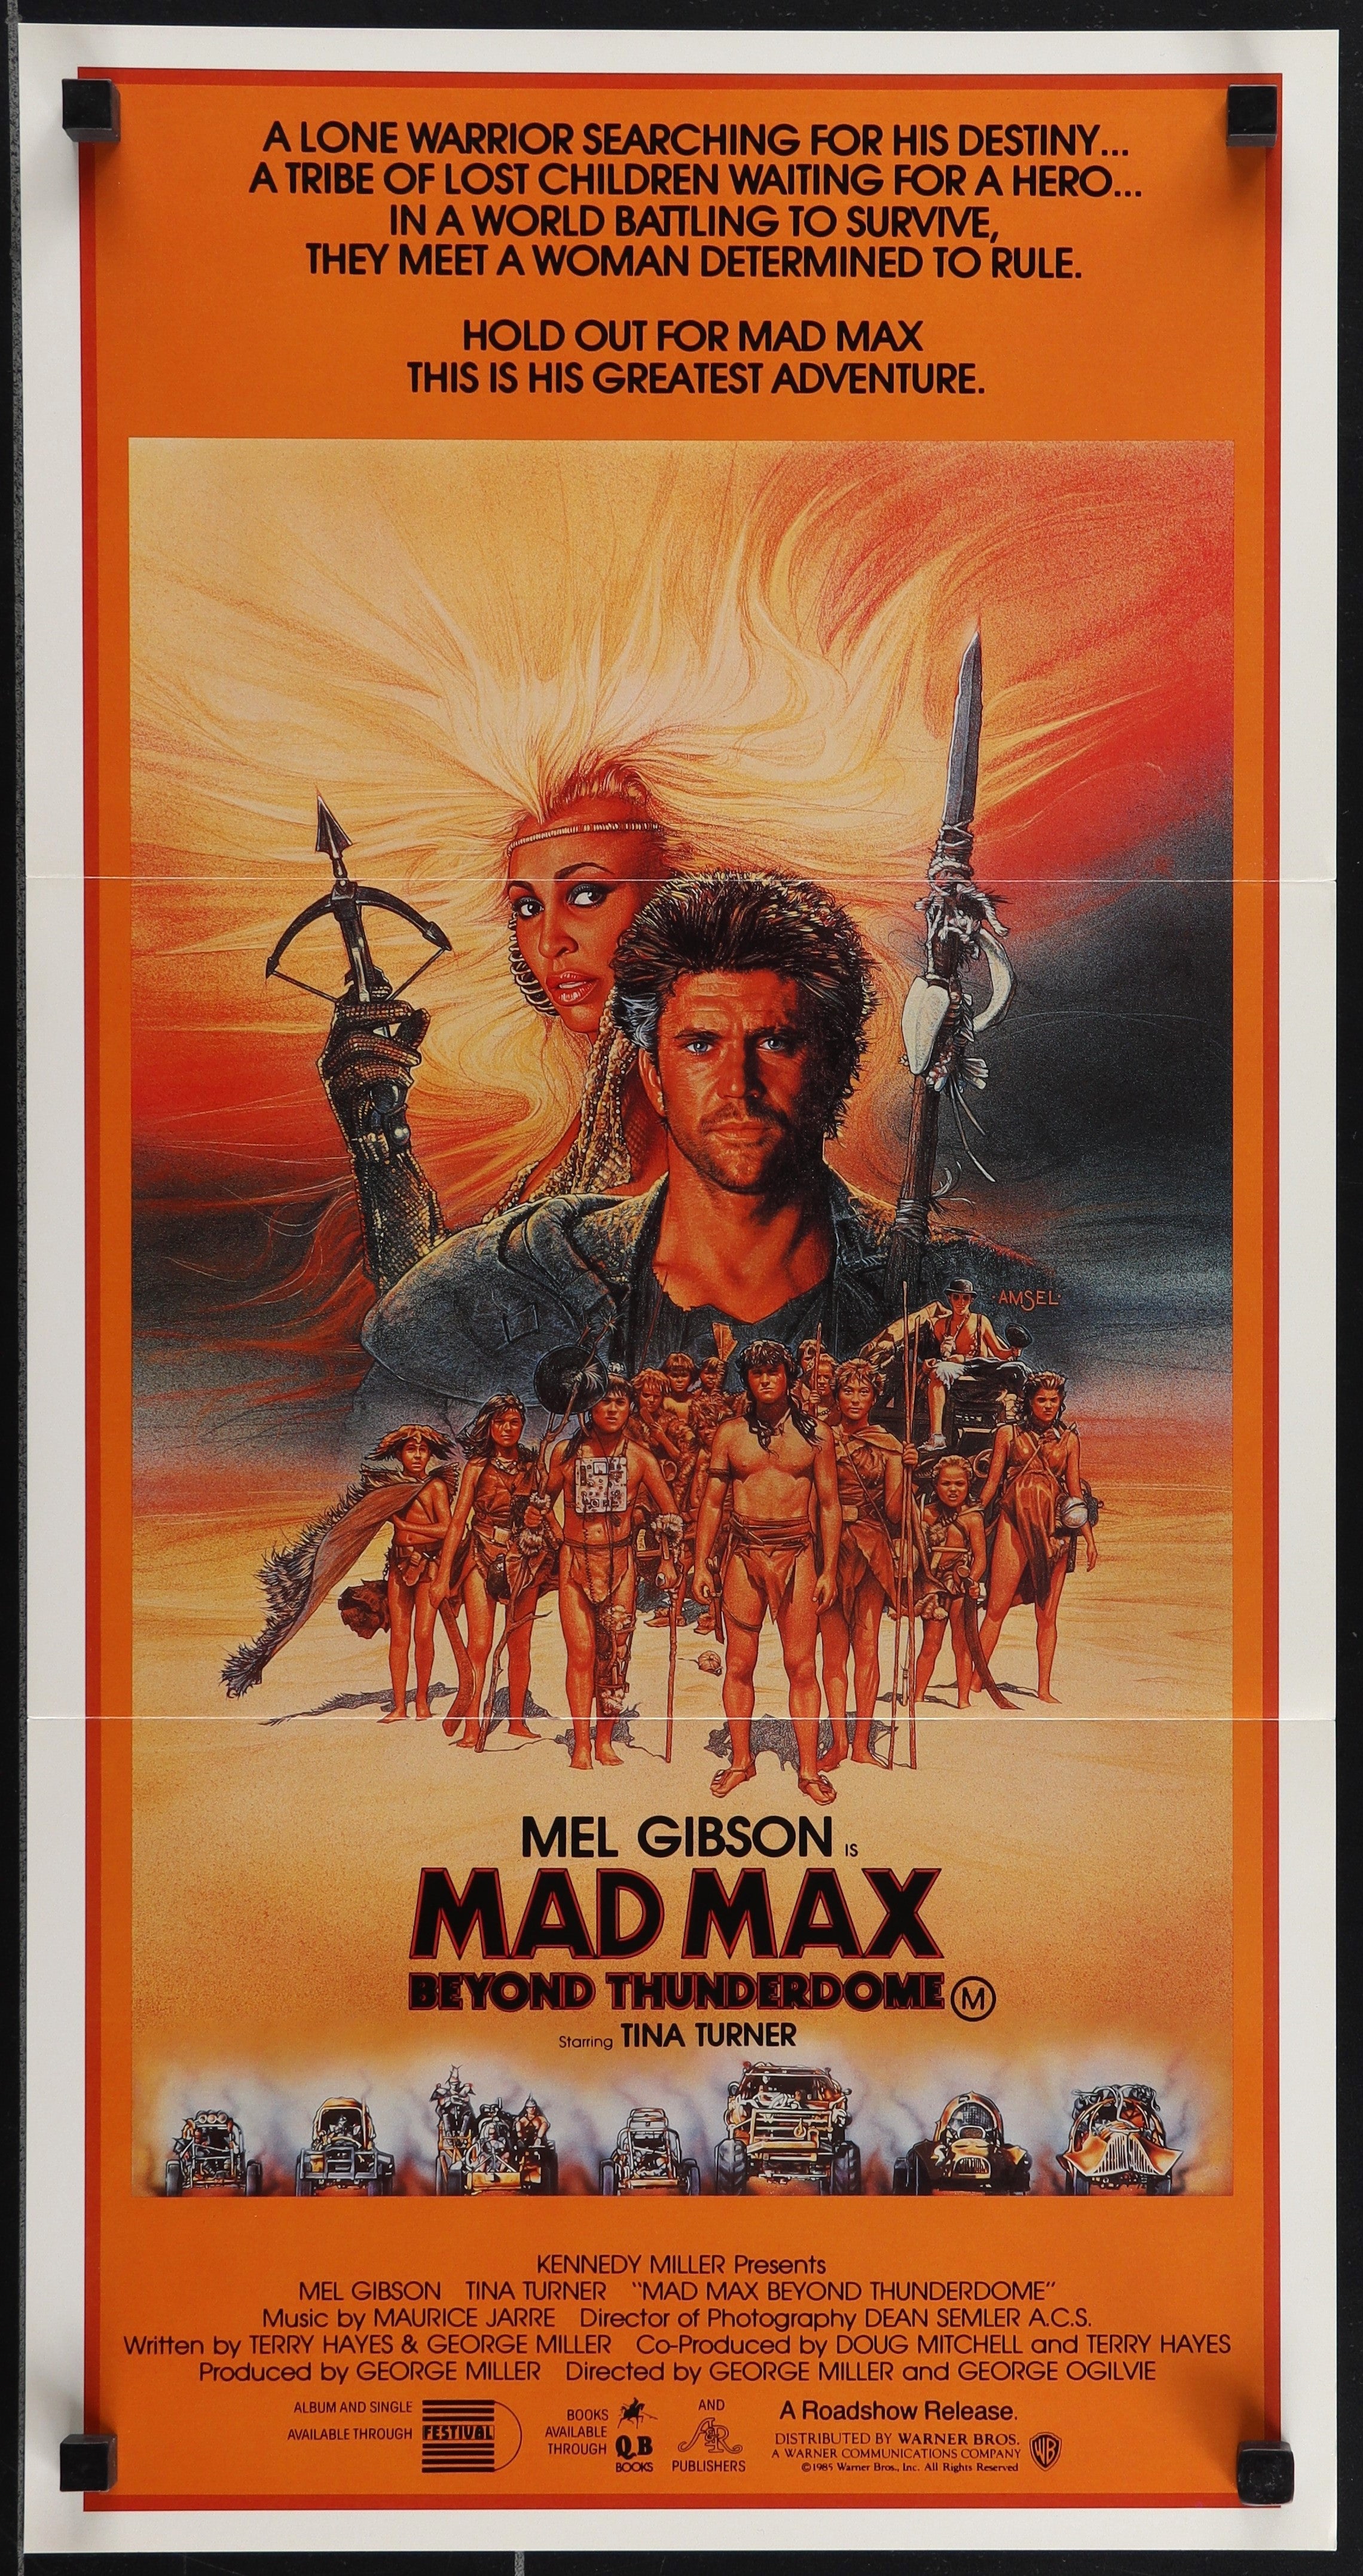 MAD MAX BEYOND THUNDERDOME (1985)